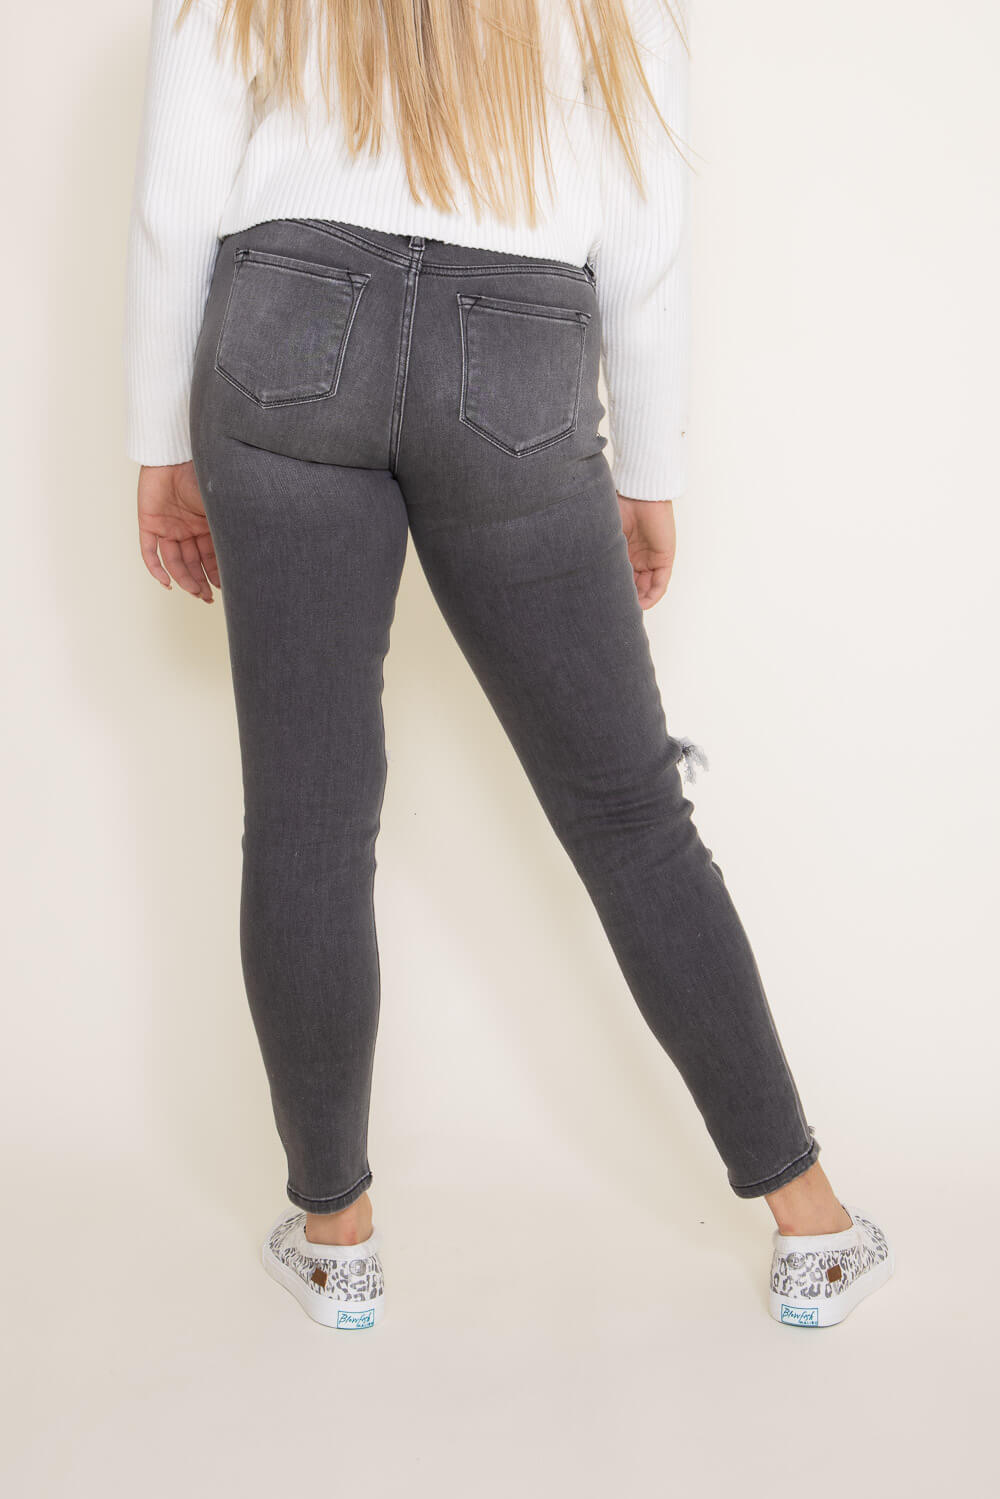 fremtid frill lastbil KanCan Mid Rise Distressed Super Skinny Jeans for Women in Light Grey –  Glik's